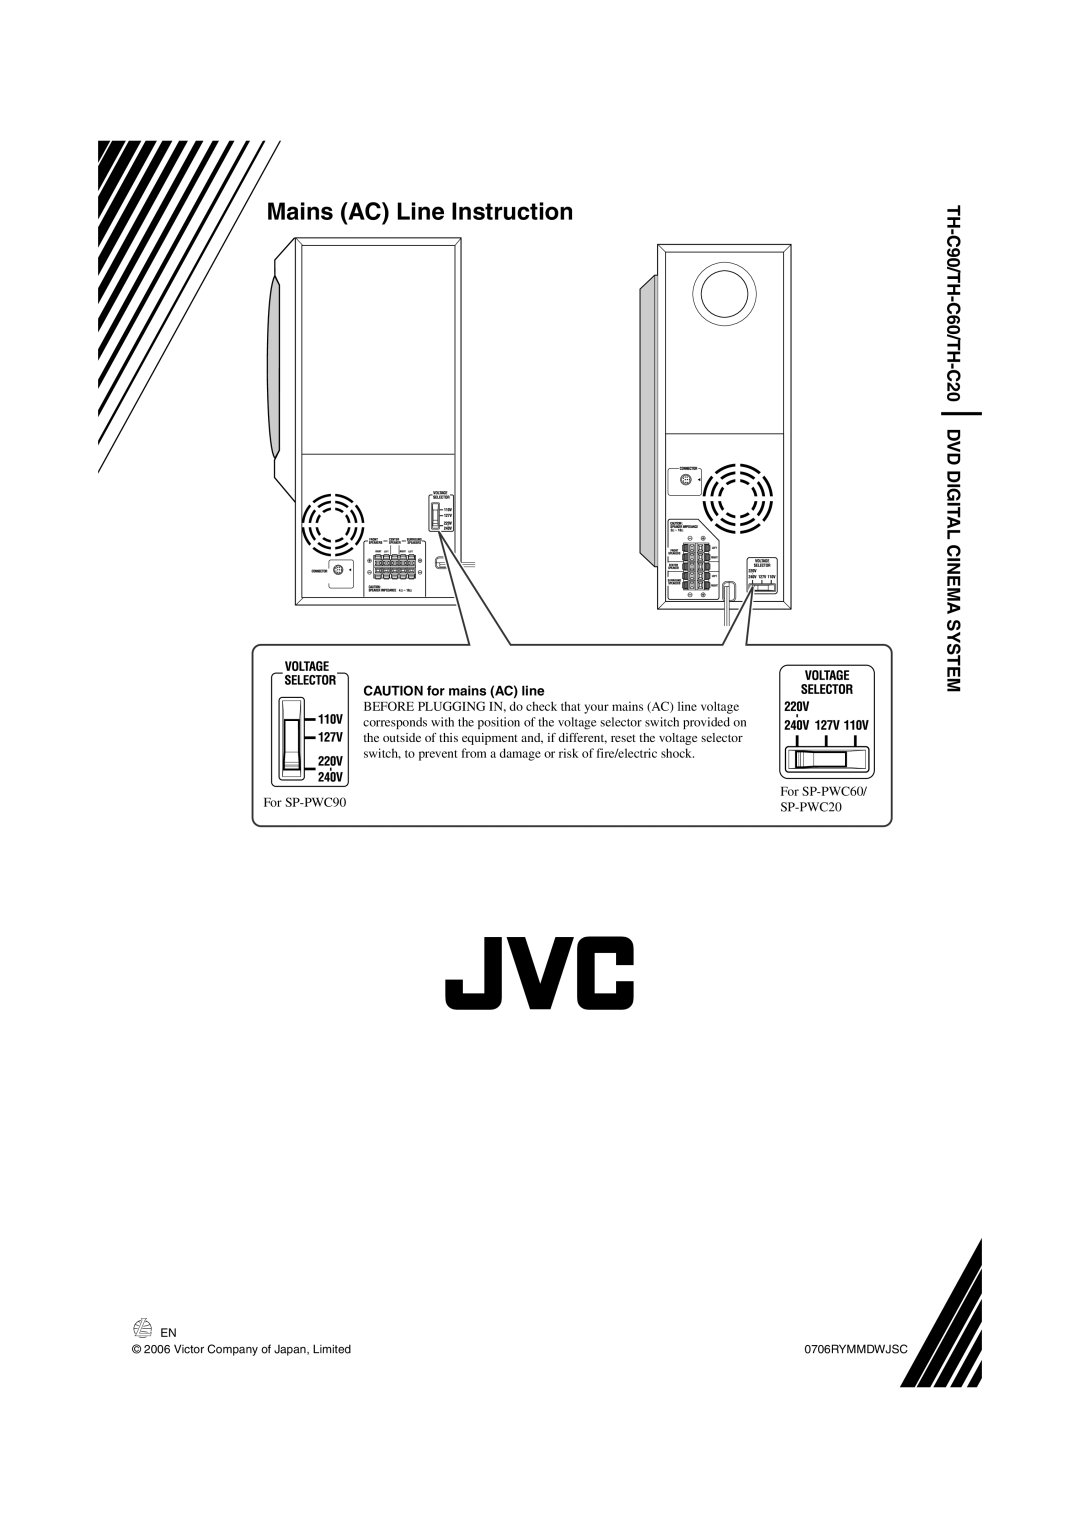 JVC LVT1504-005B manual Mains AC Line Instruction, TH-C90/TH-C60/TH-C20DVD DIGITAL CINEMA SYSTEM, CAUTION for mains AC line 